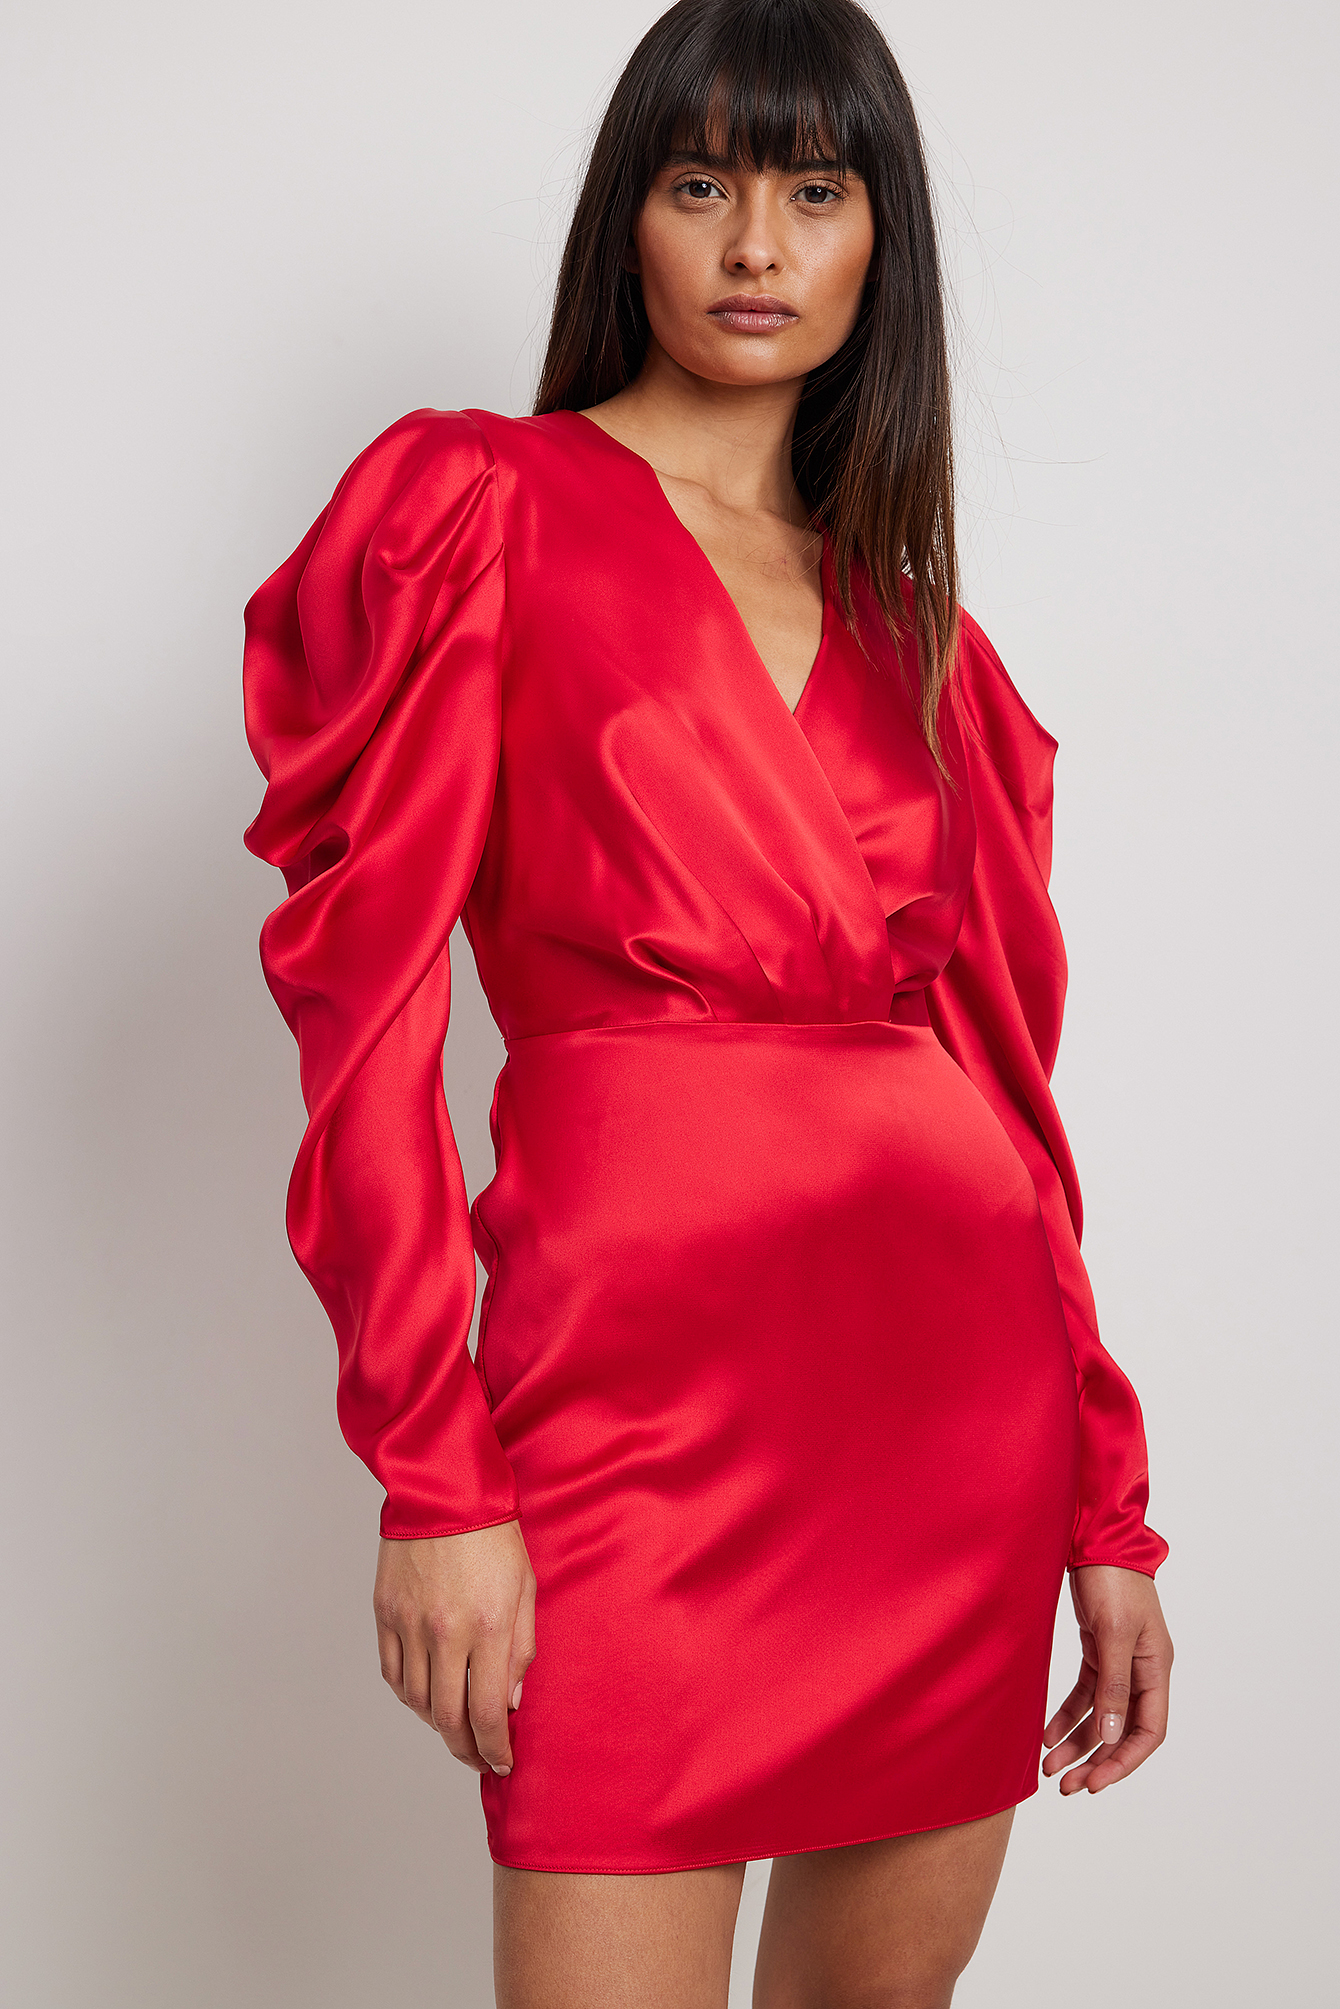 Womens Red Satin Dresses